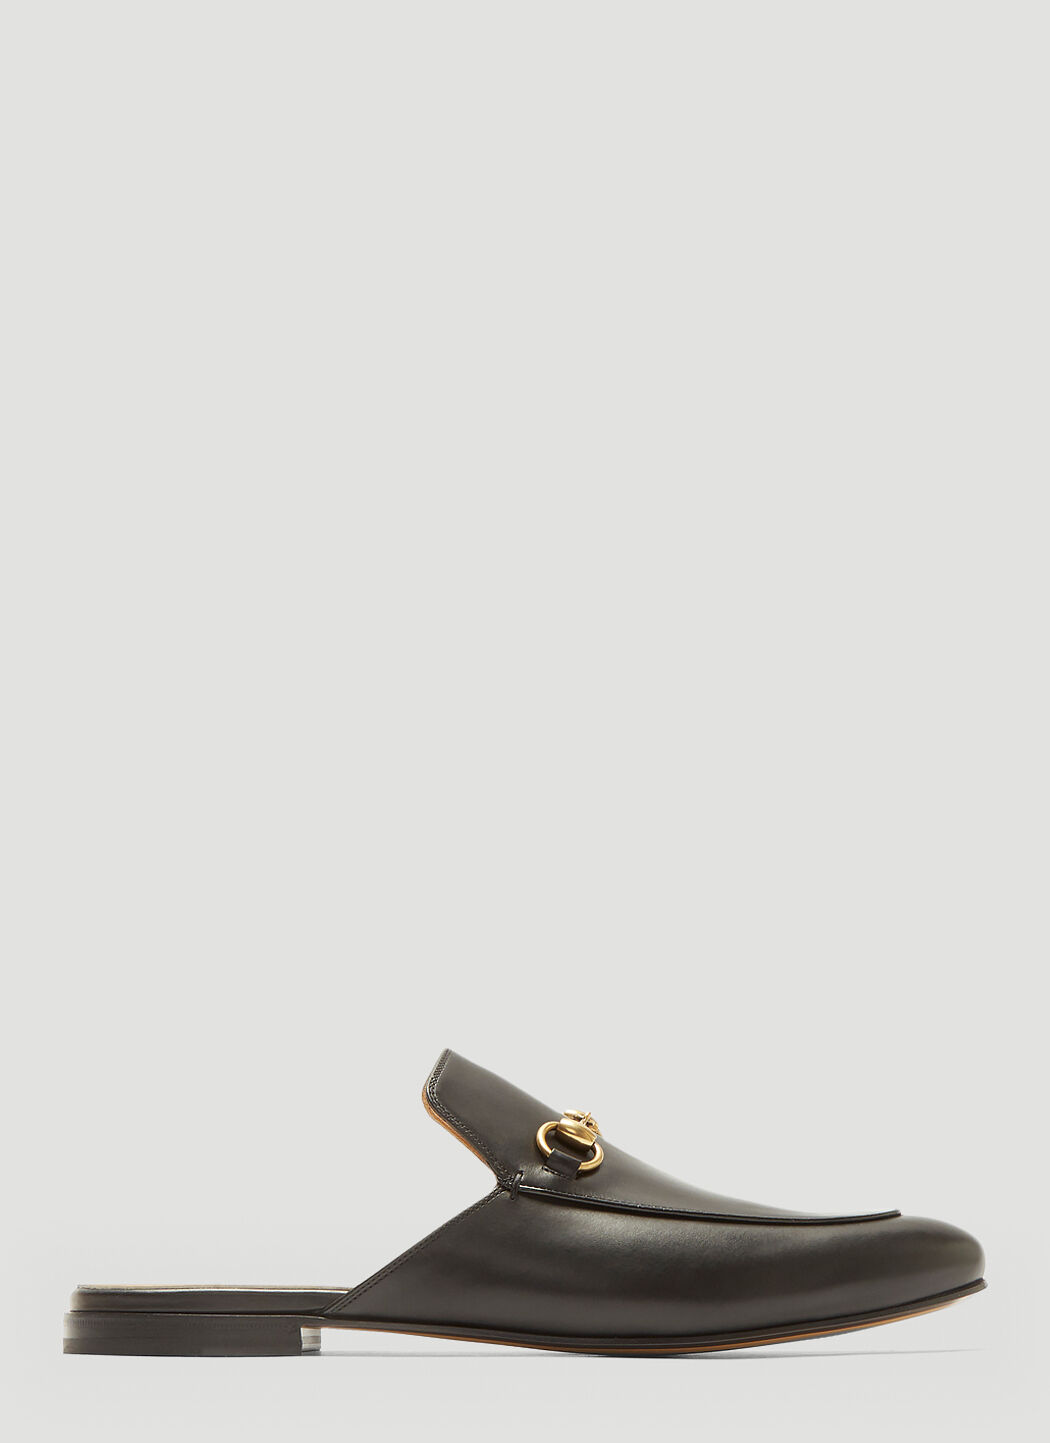 Saint Laurent Horsebit Leather Slipper Shoes Black sla0136039